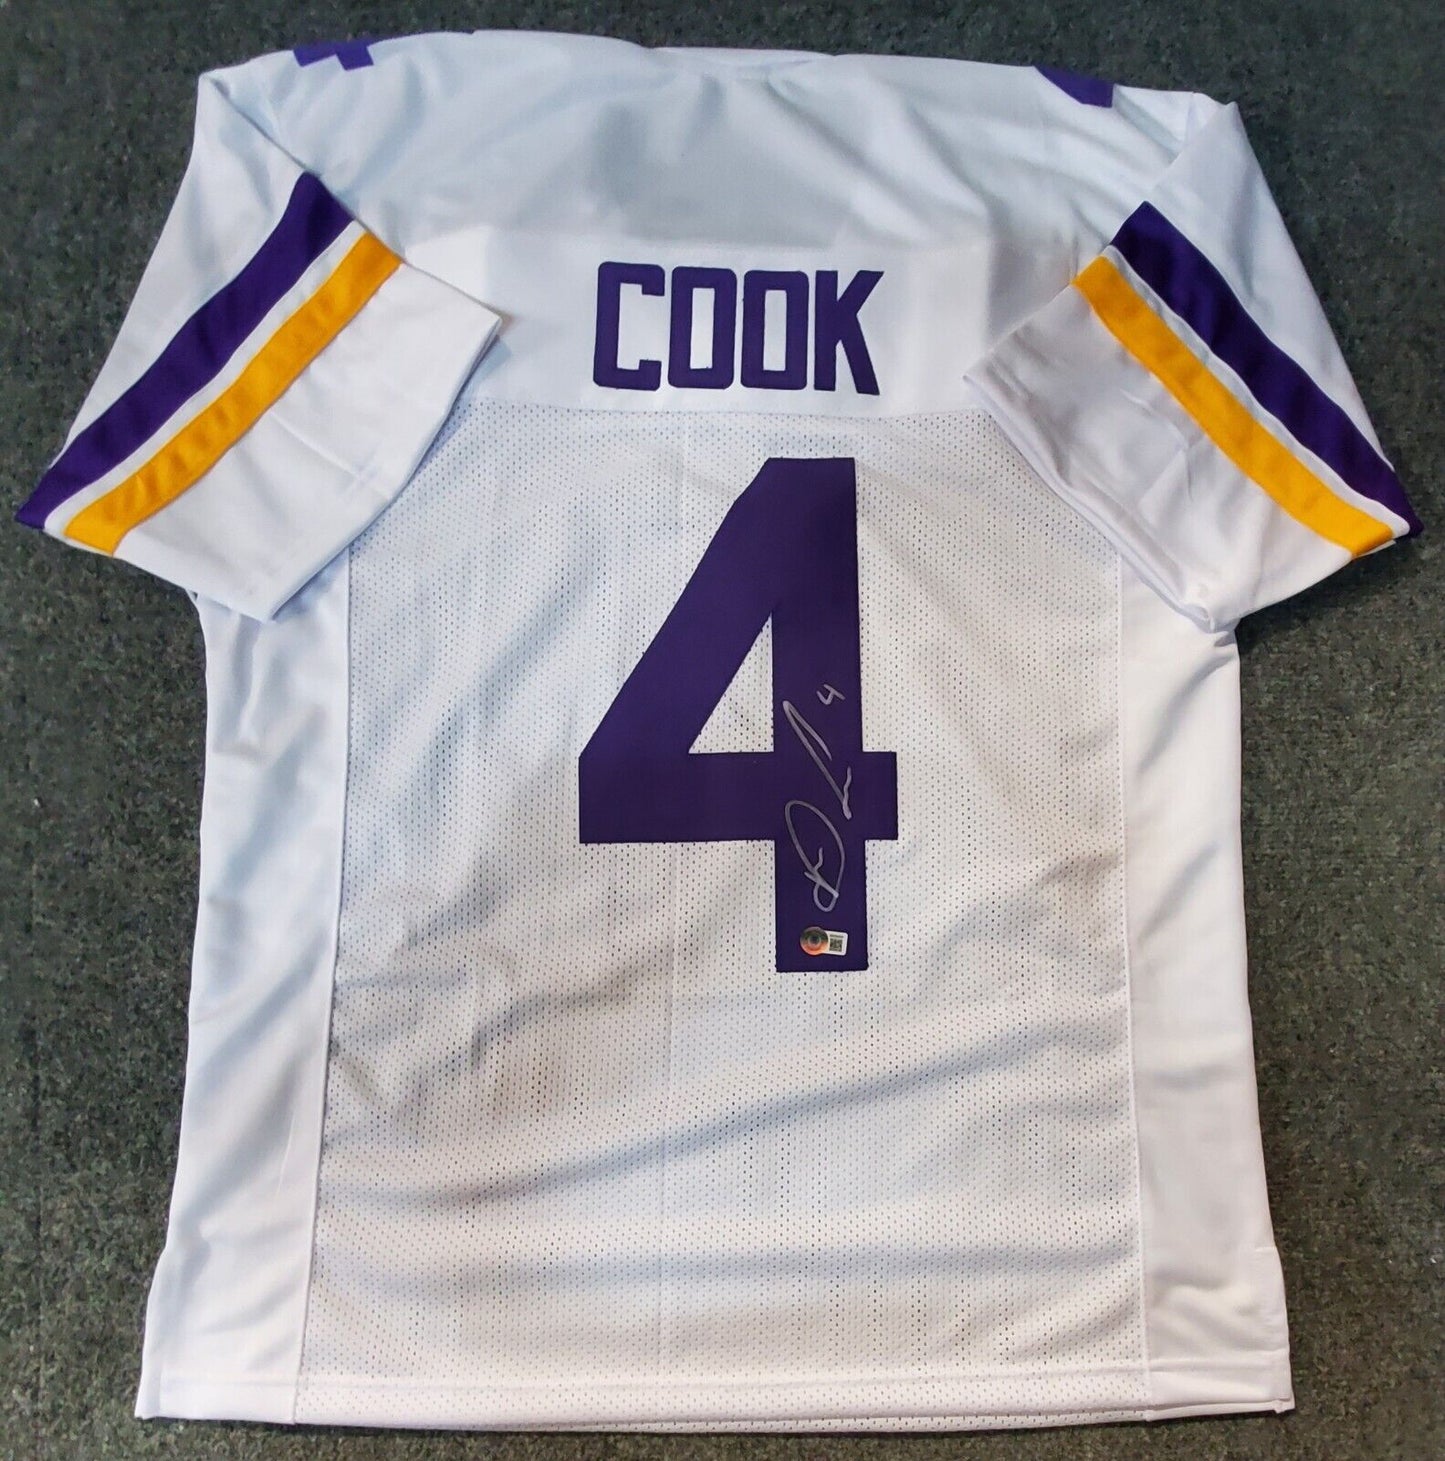 Dalvin Cook Signed Custom Purple Football Jersey